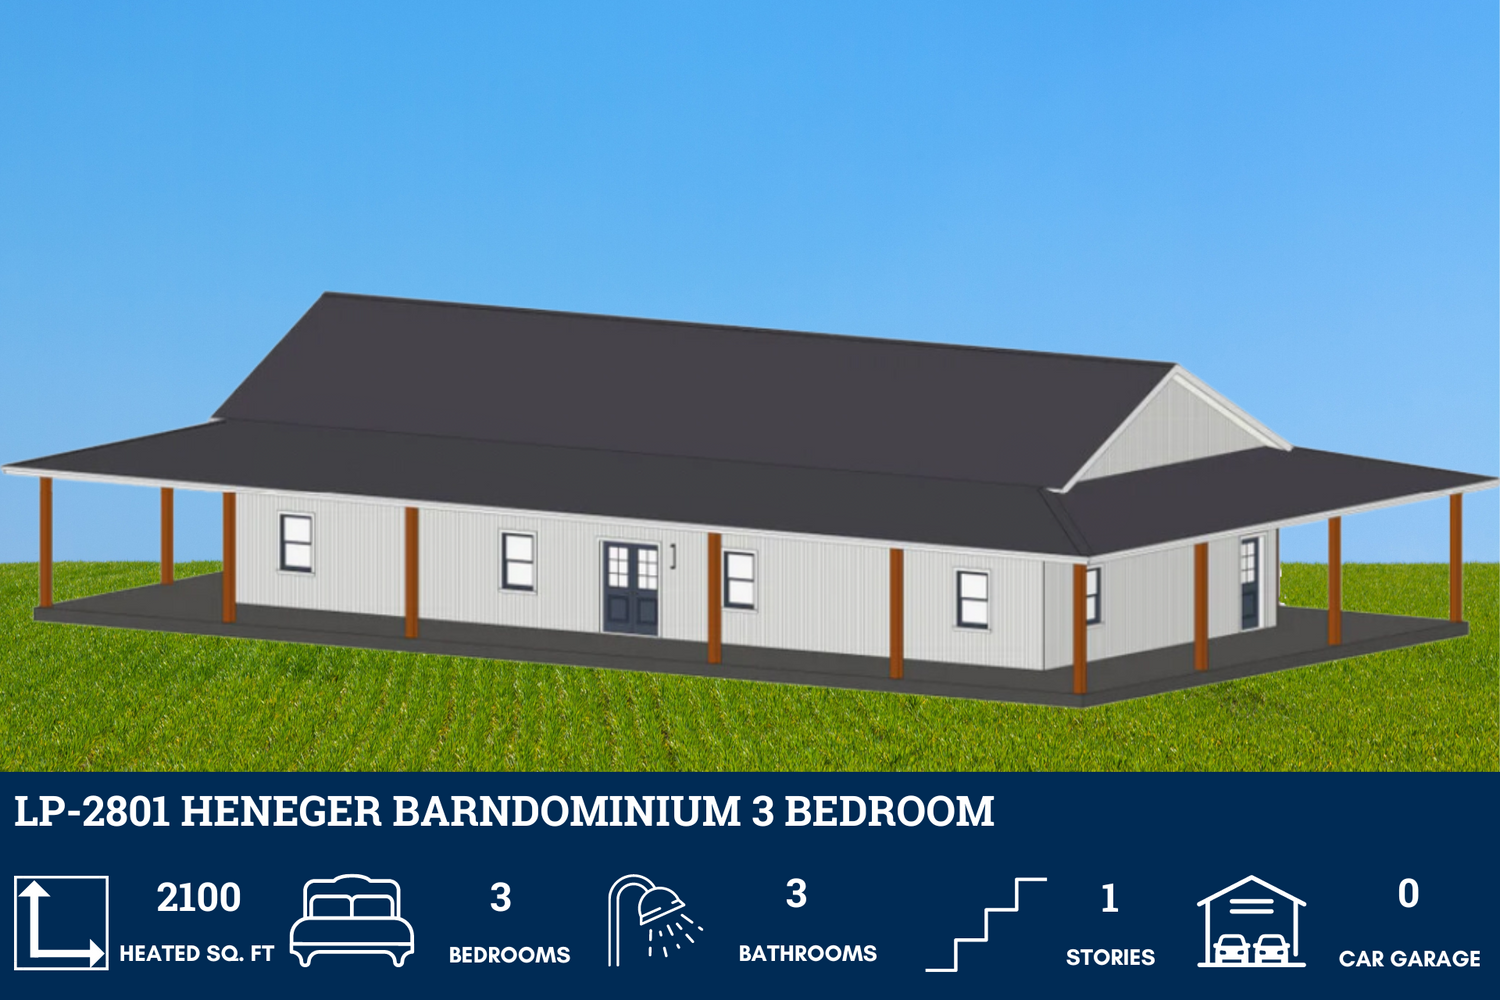 3 Bedroom 3 Bathroom Barndominium House Plans